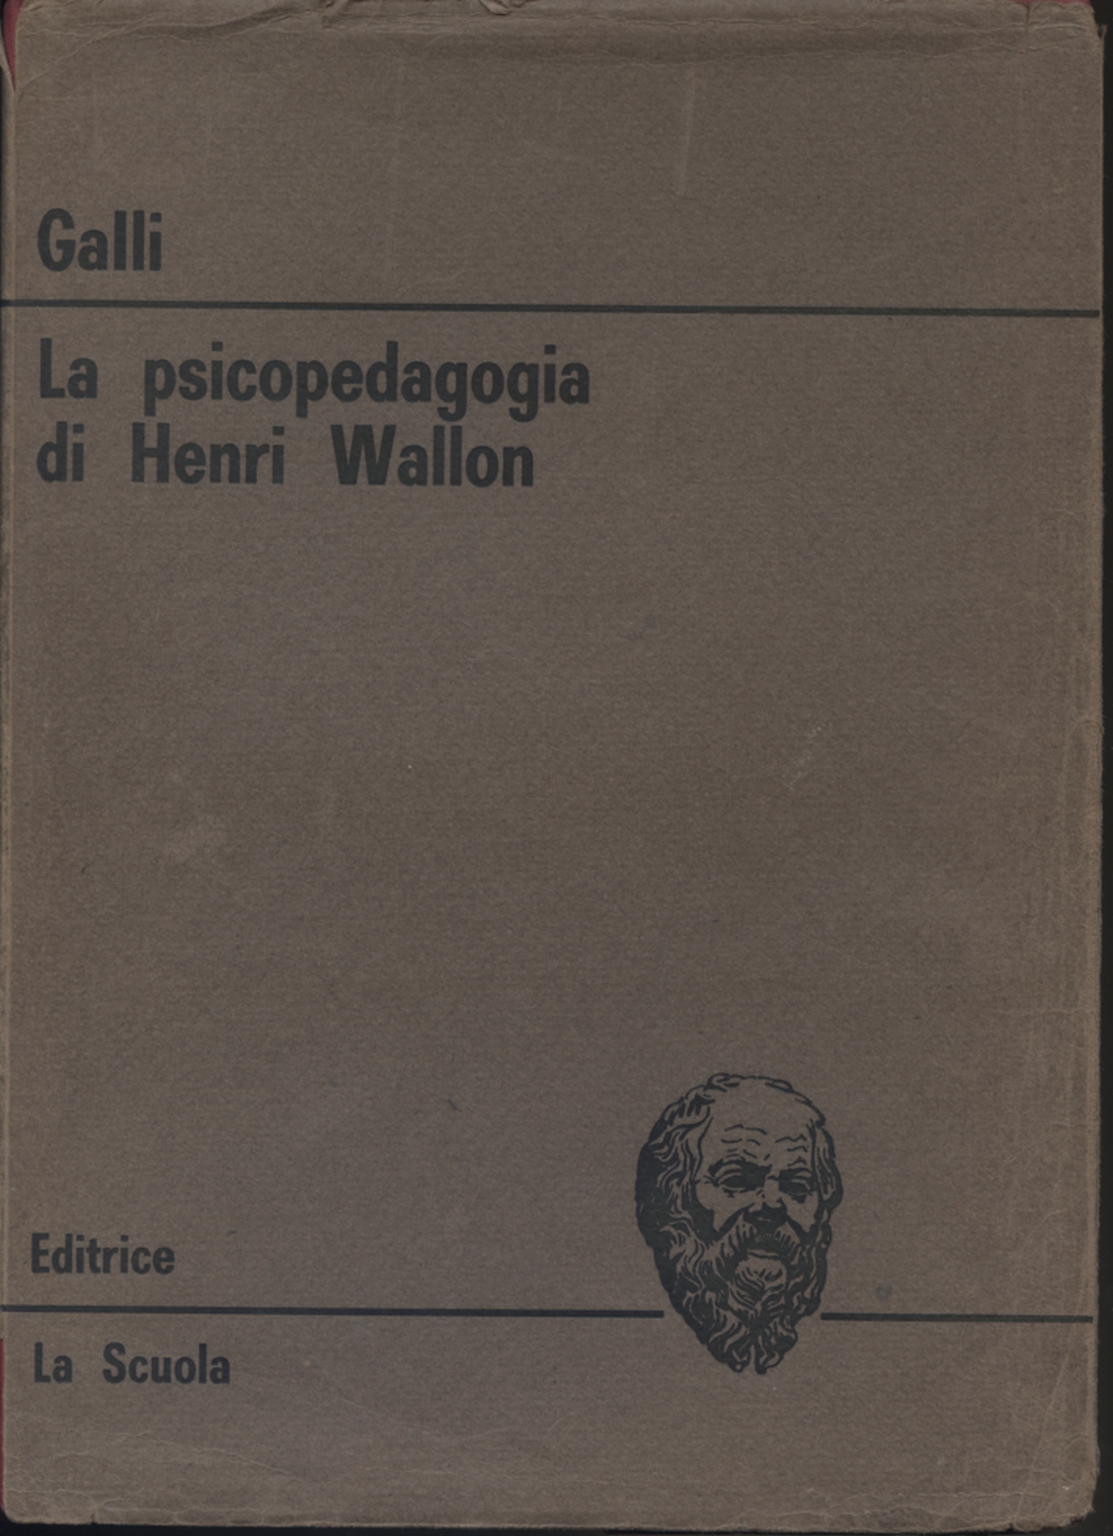 El artista Henri Wallon, Norberto Galli